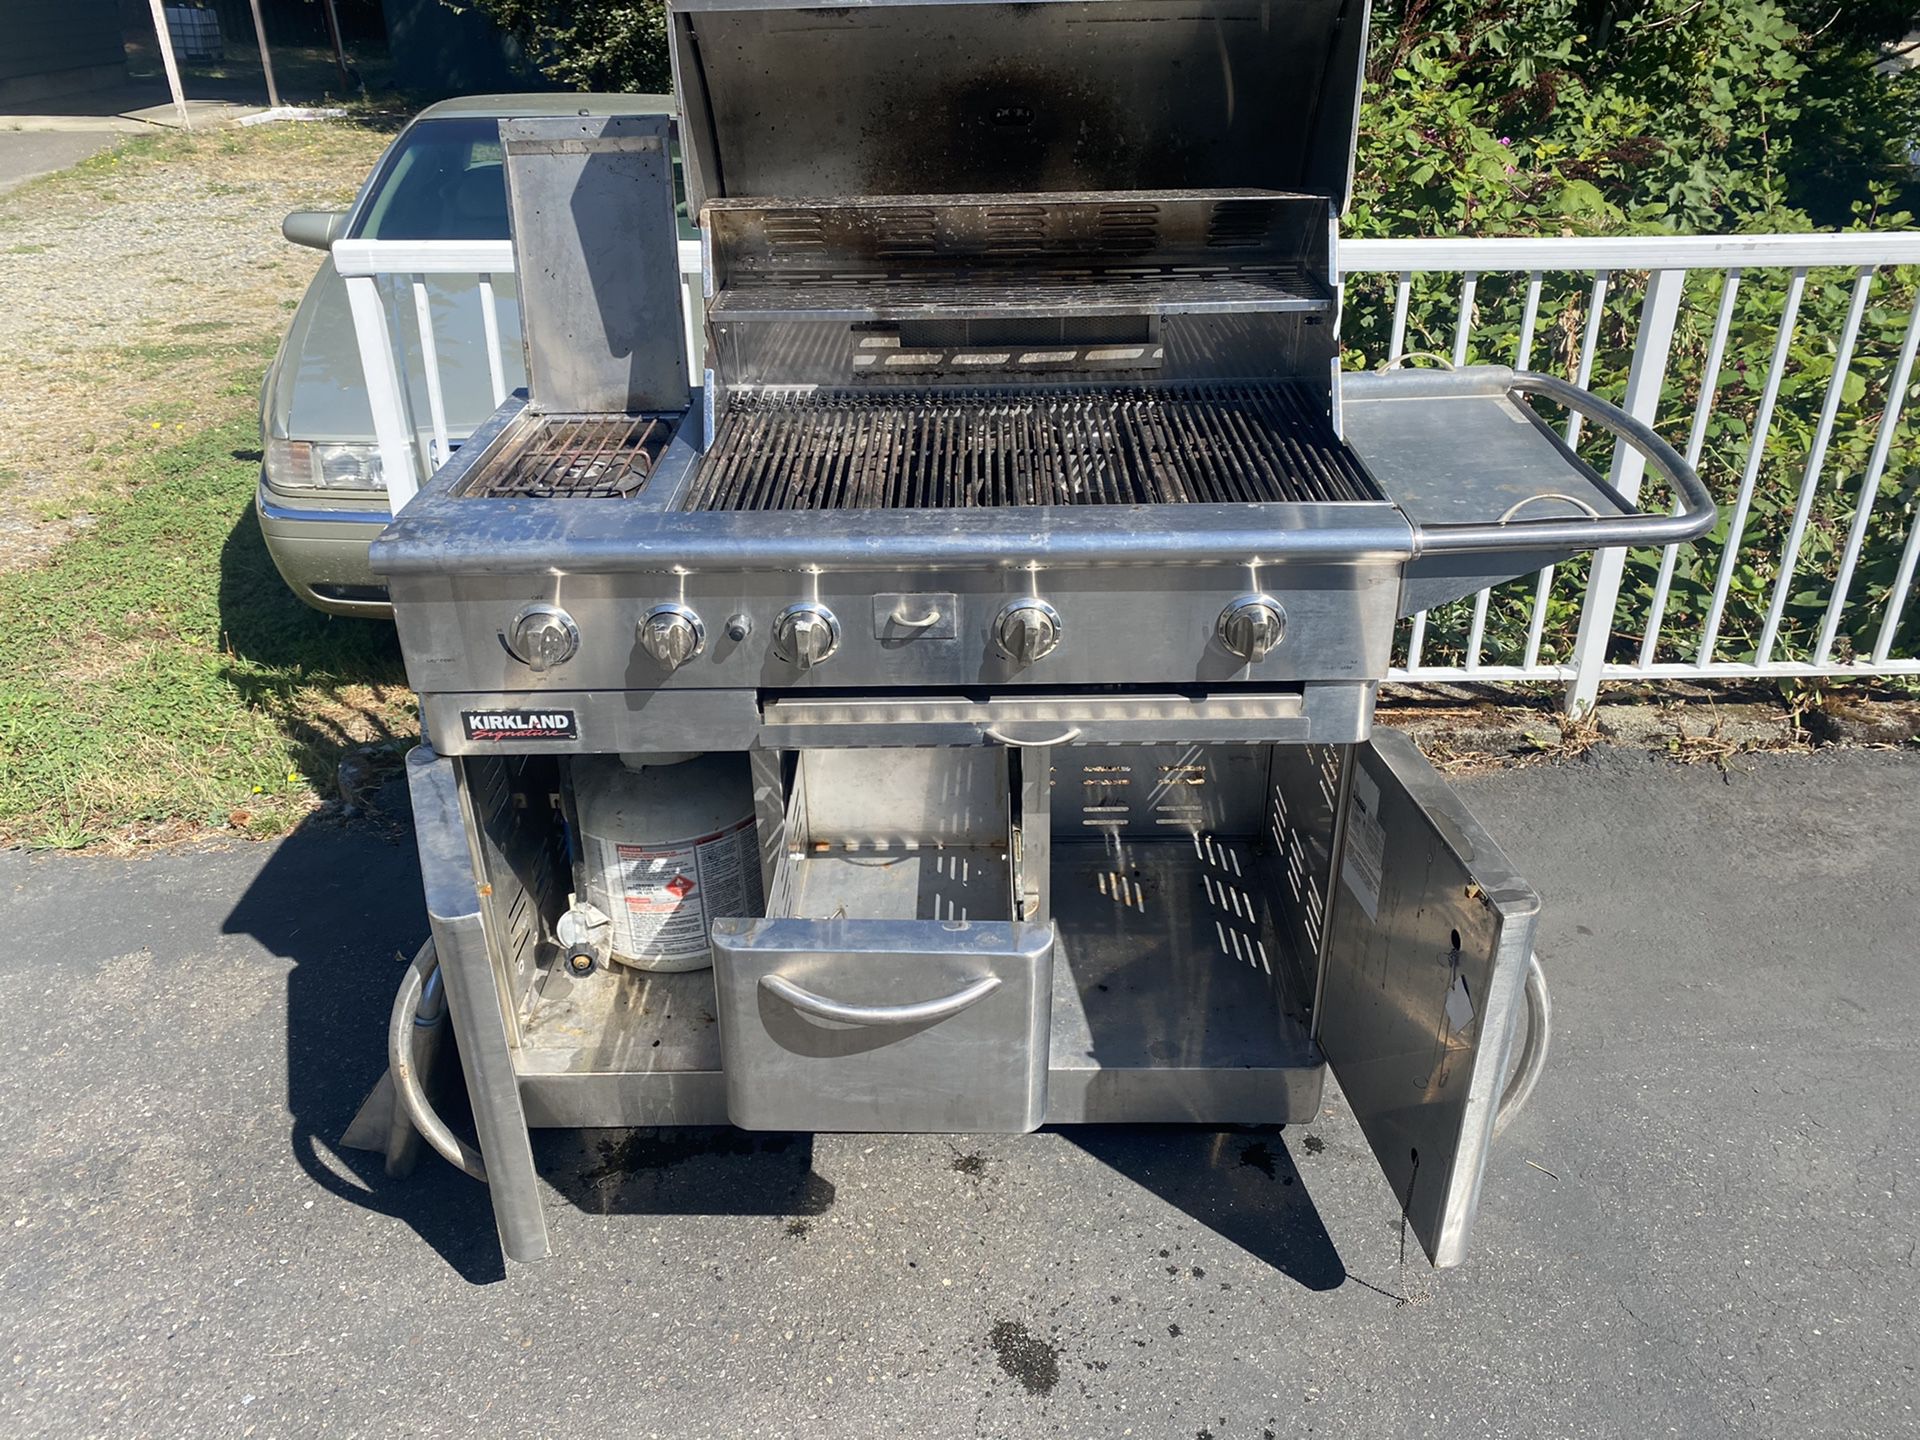 Kirkland BBQ grill with extra burner